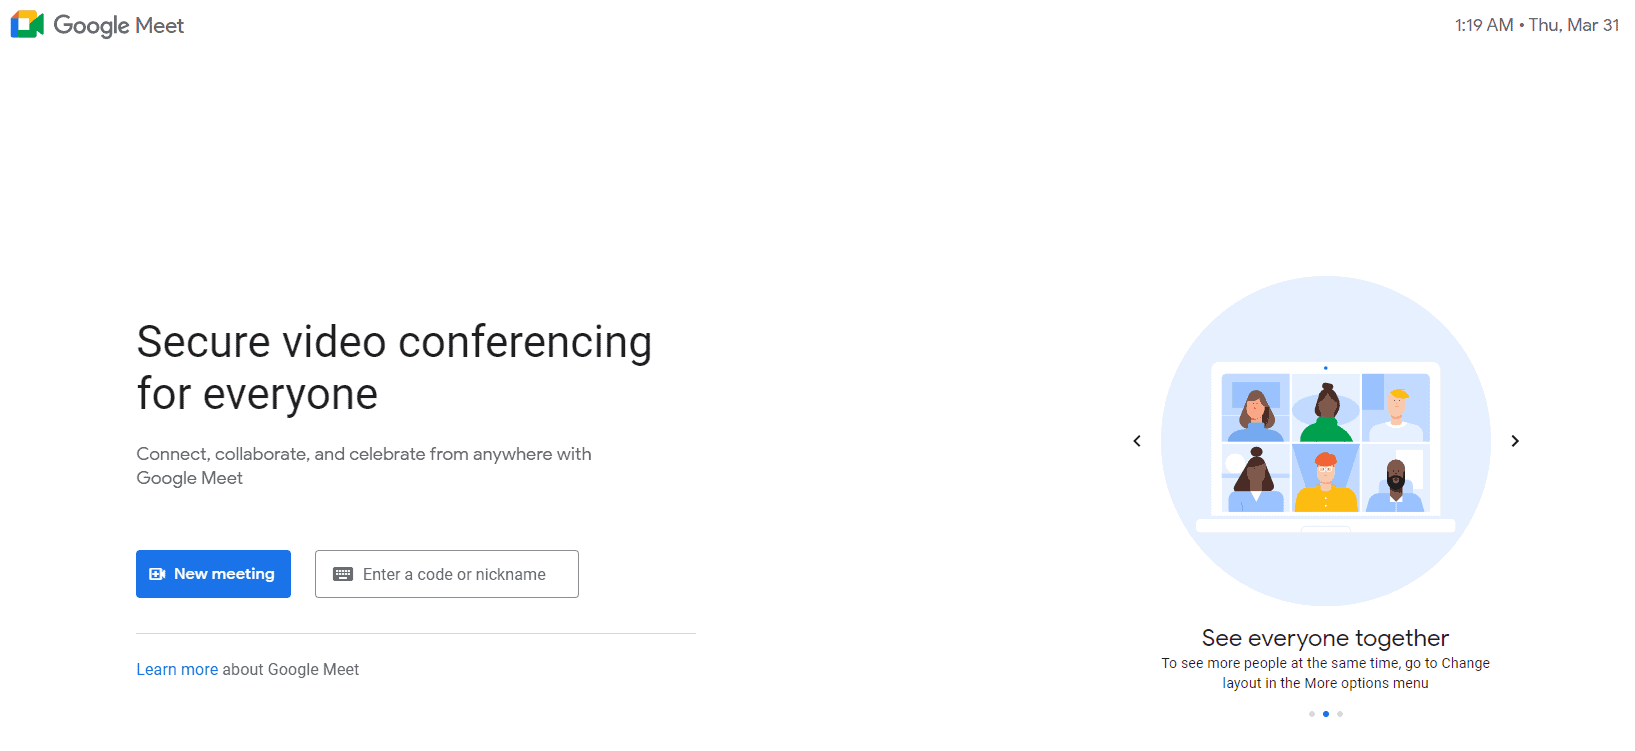 Google Meet video conferencing